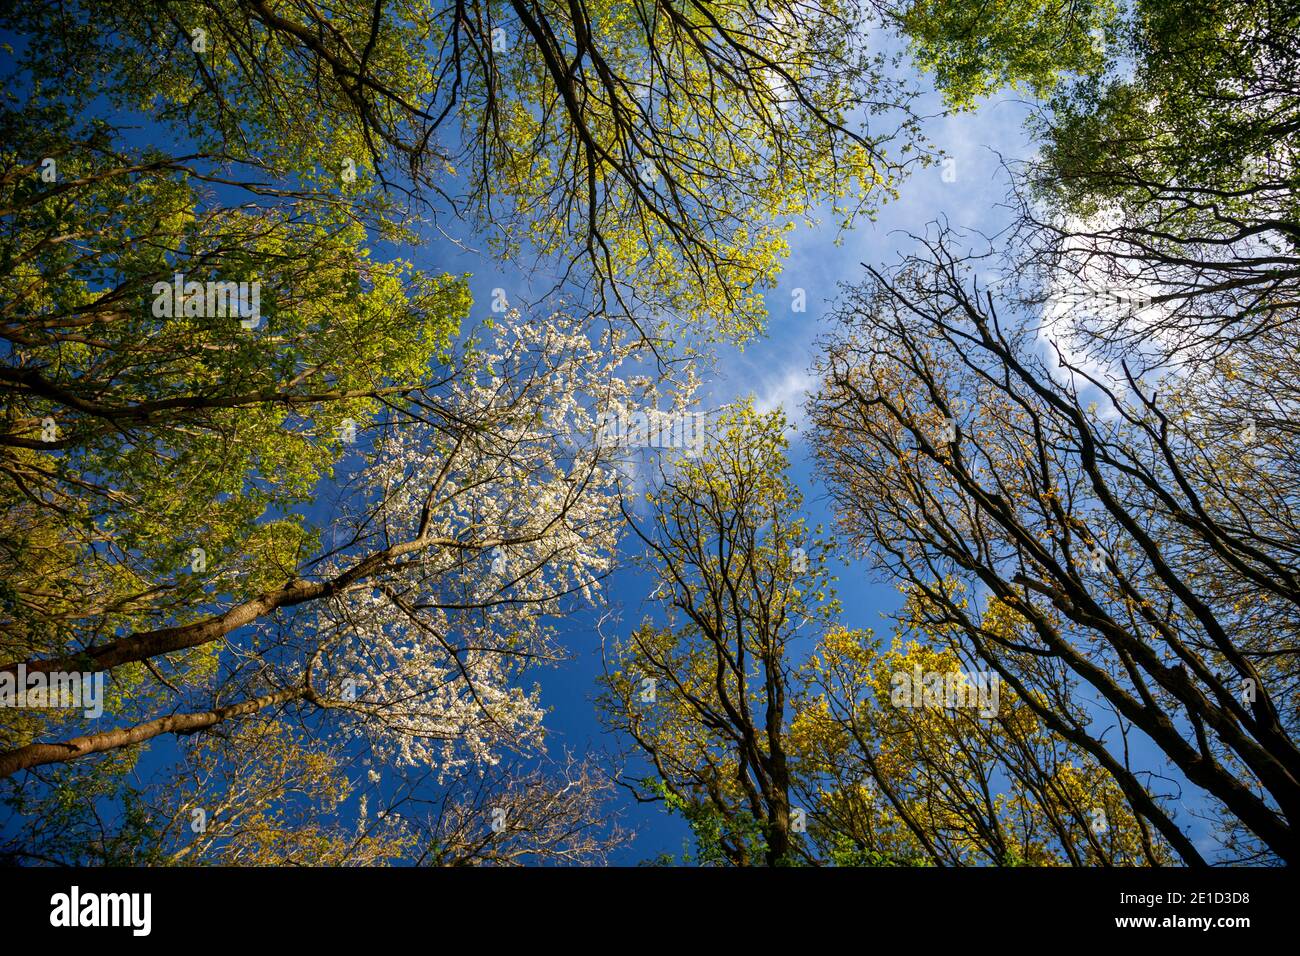 Very Tall, Straight Tree Growing into a Woodland Sky Stock Photo - Image of  tree, woodland: 131086622